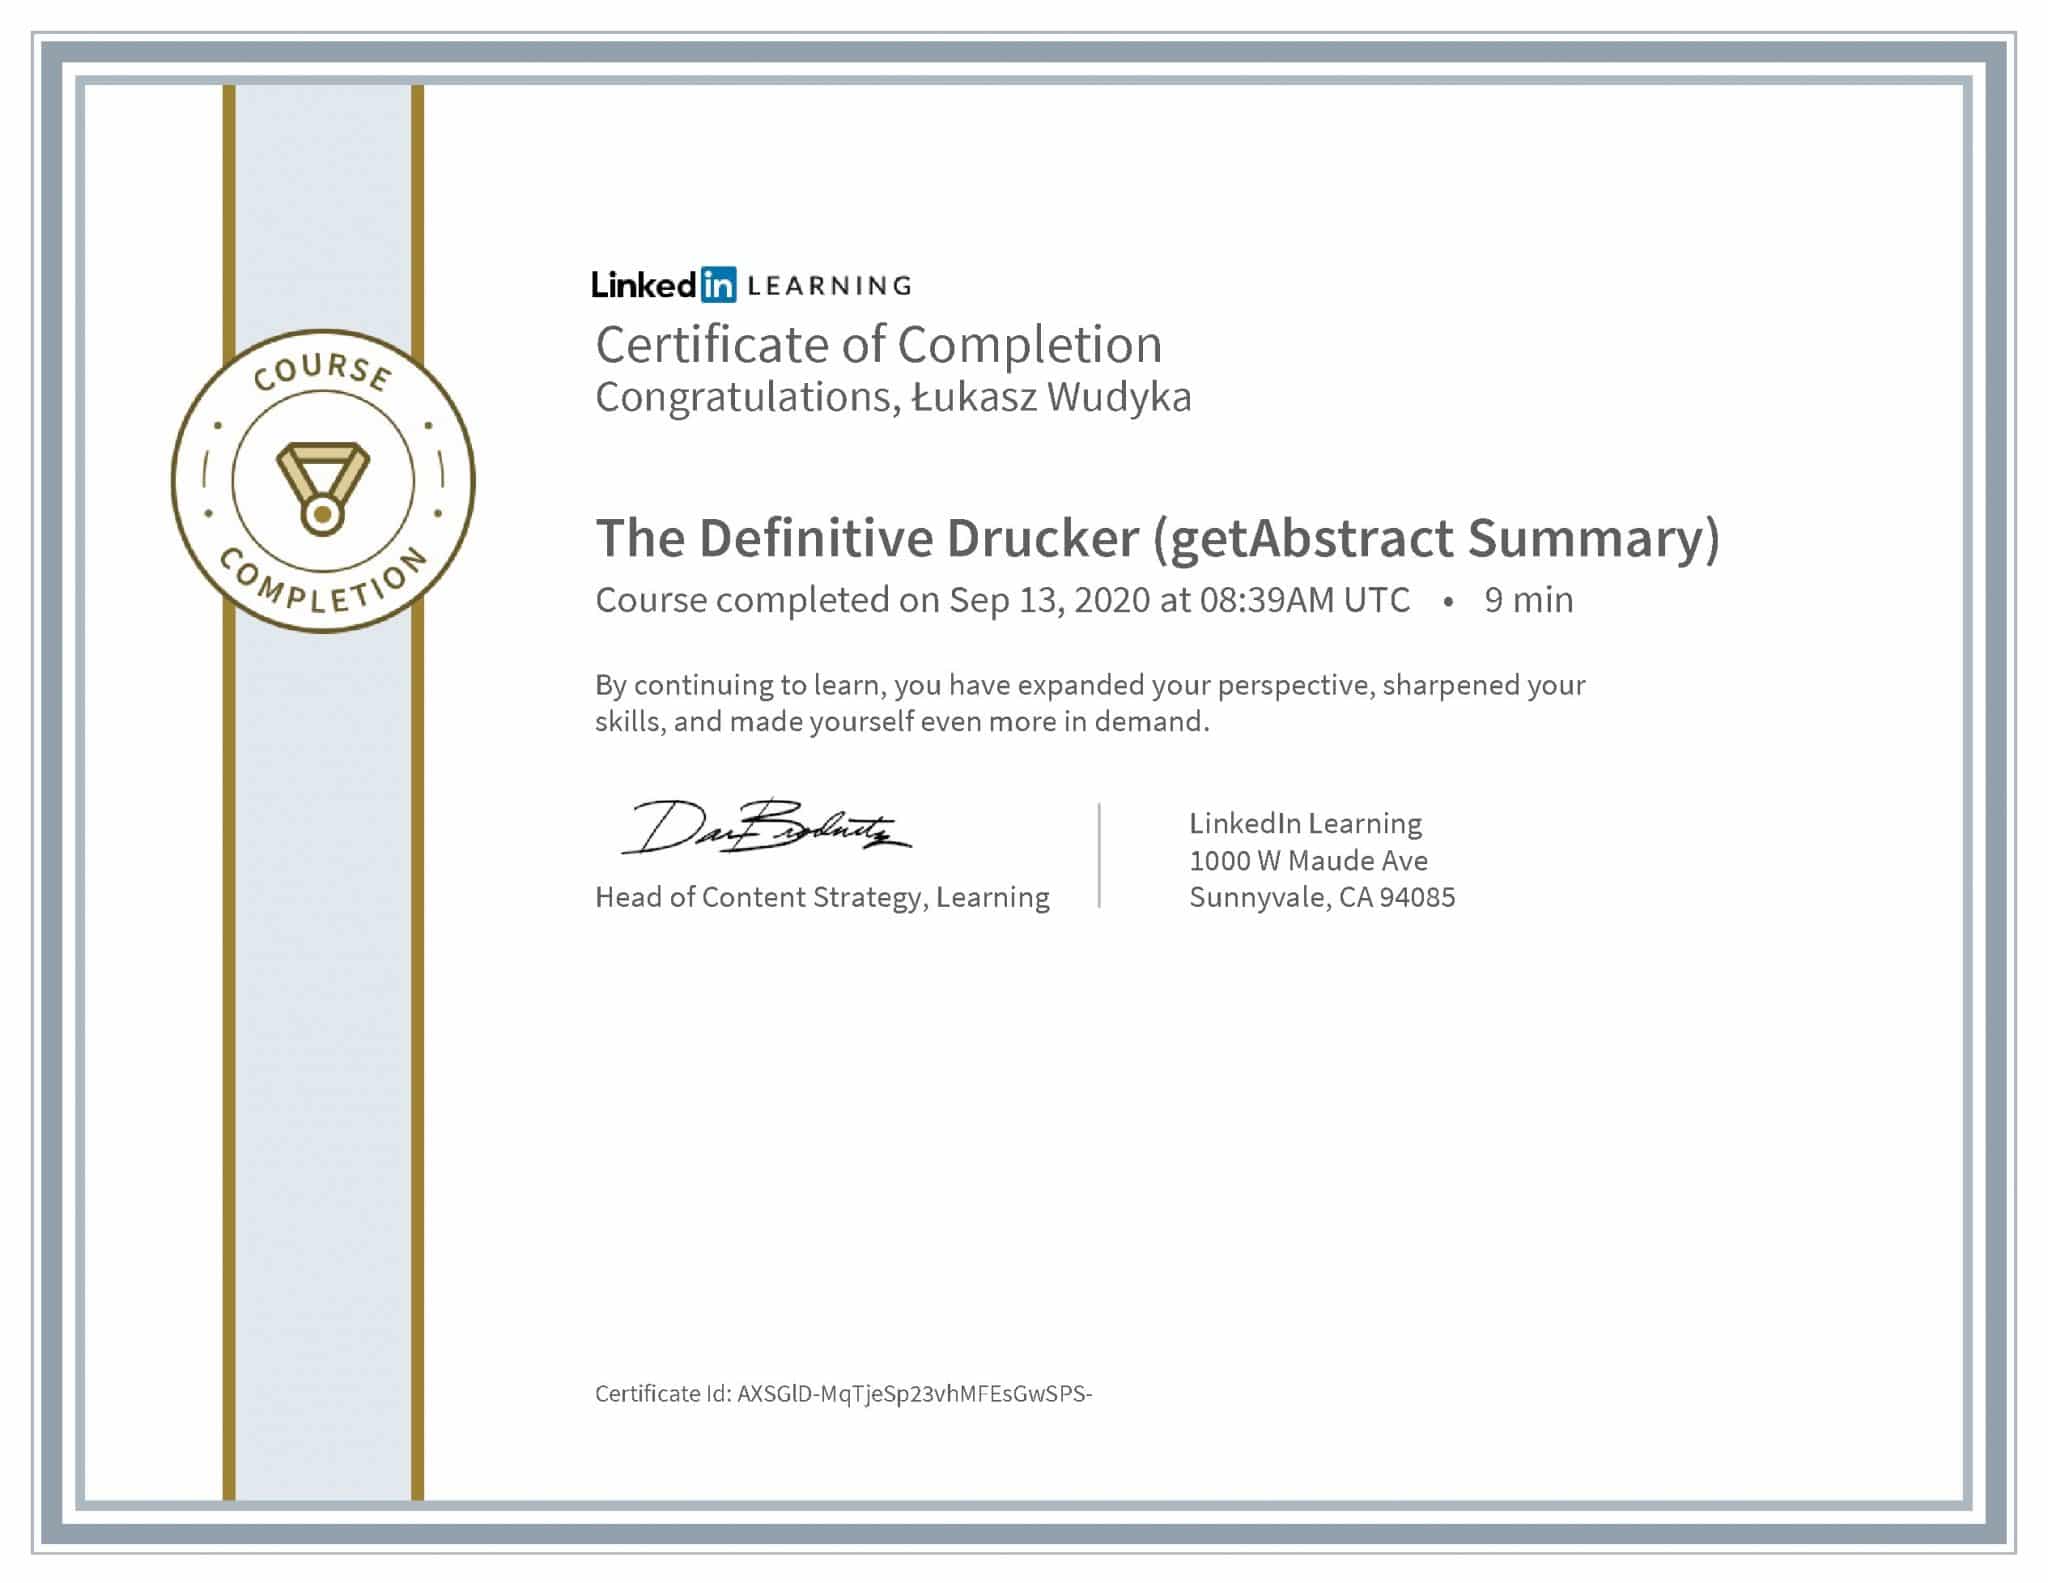 Łukasz Wudyka certyfikat LinkedIn The Definitive Drucker (getAbstract Summary)